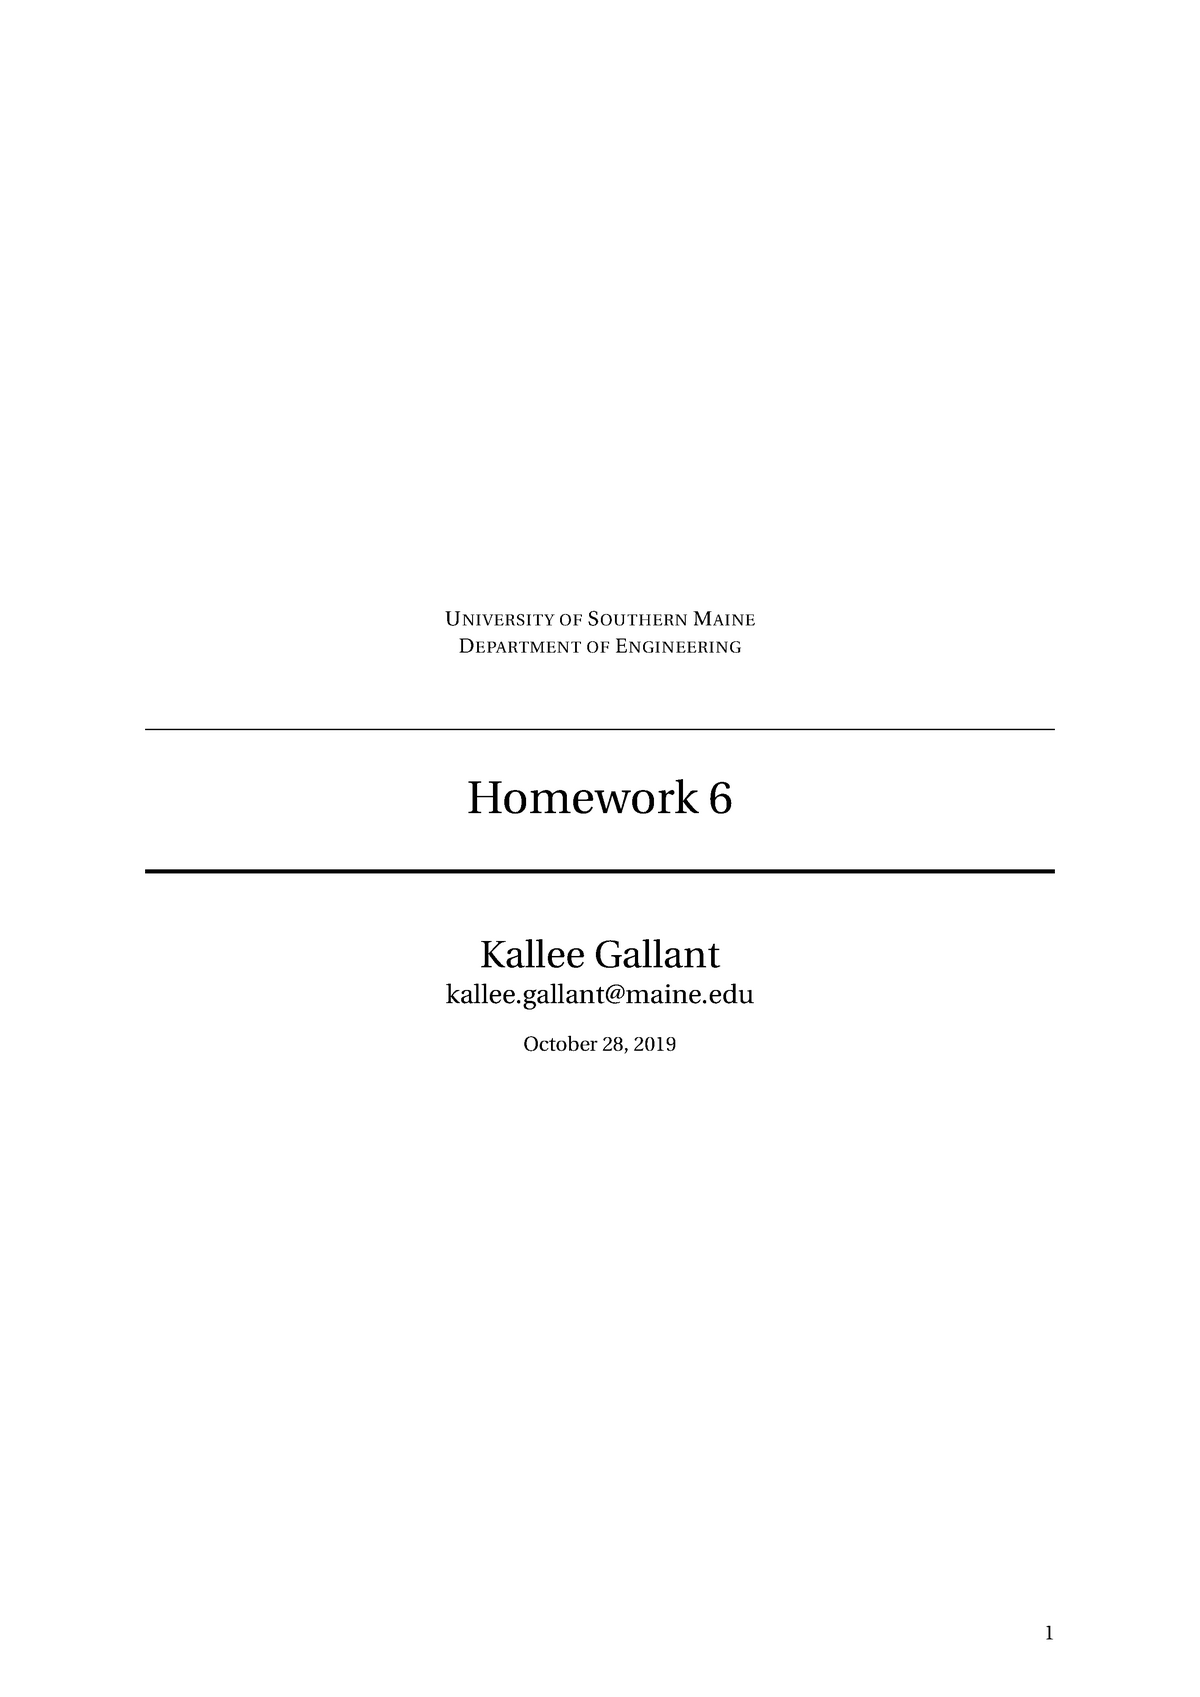 EGN260 Homework 6 - UNIVERSITY OFSOUTHERNMAINE DEPARTMENT OFENGINEERING  Homework 6 Kallee Gallant - StuDocu